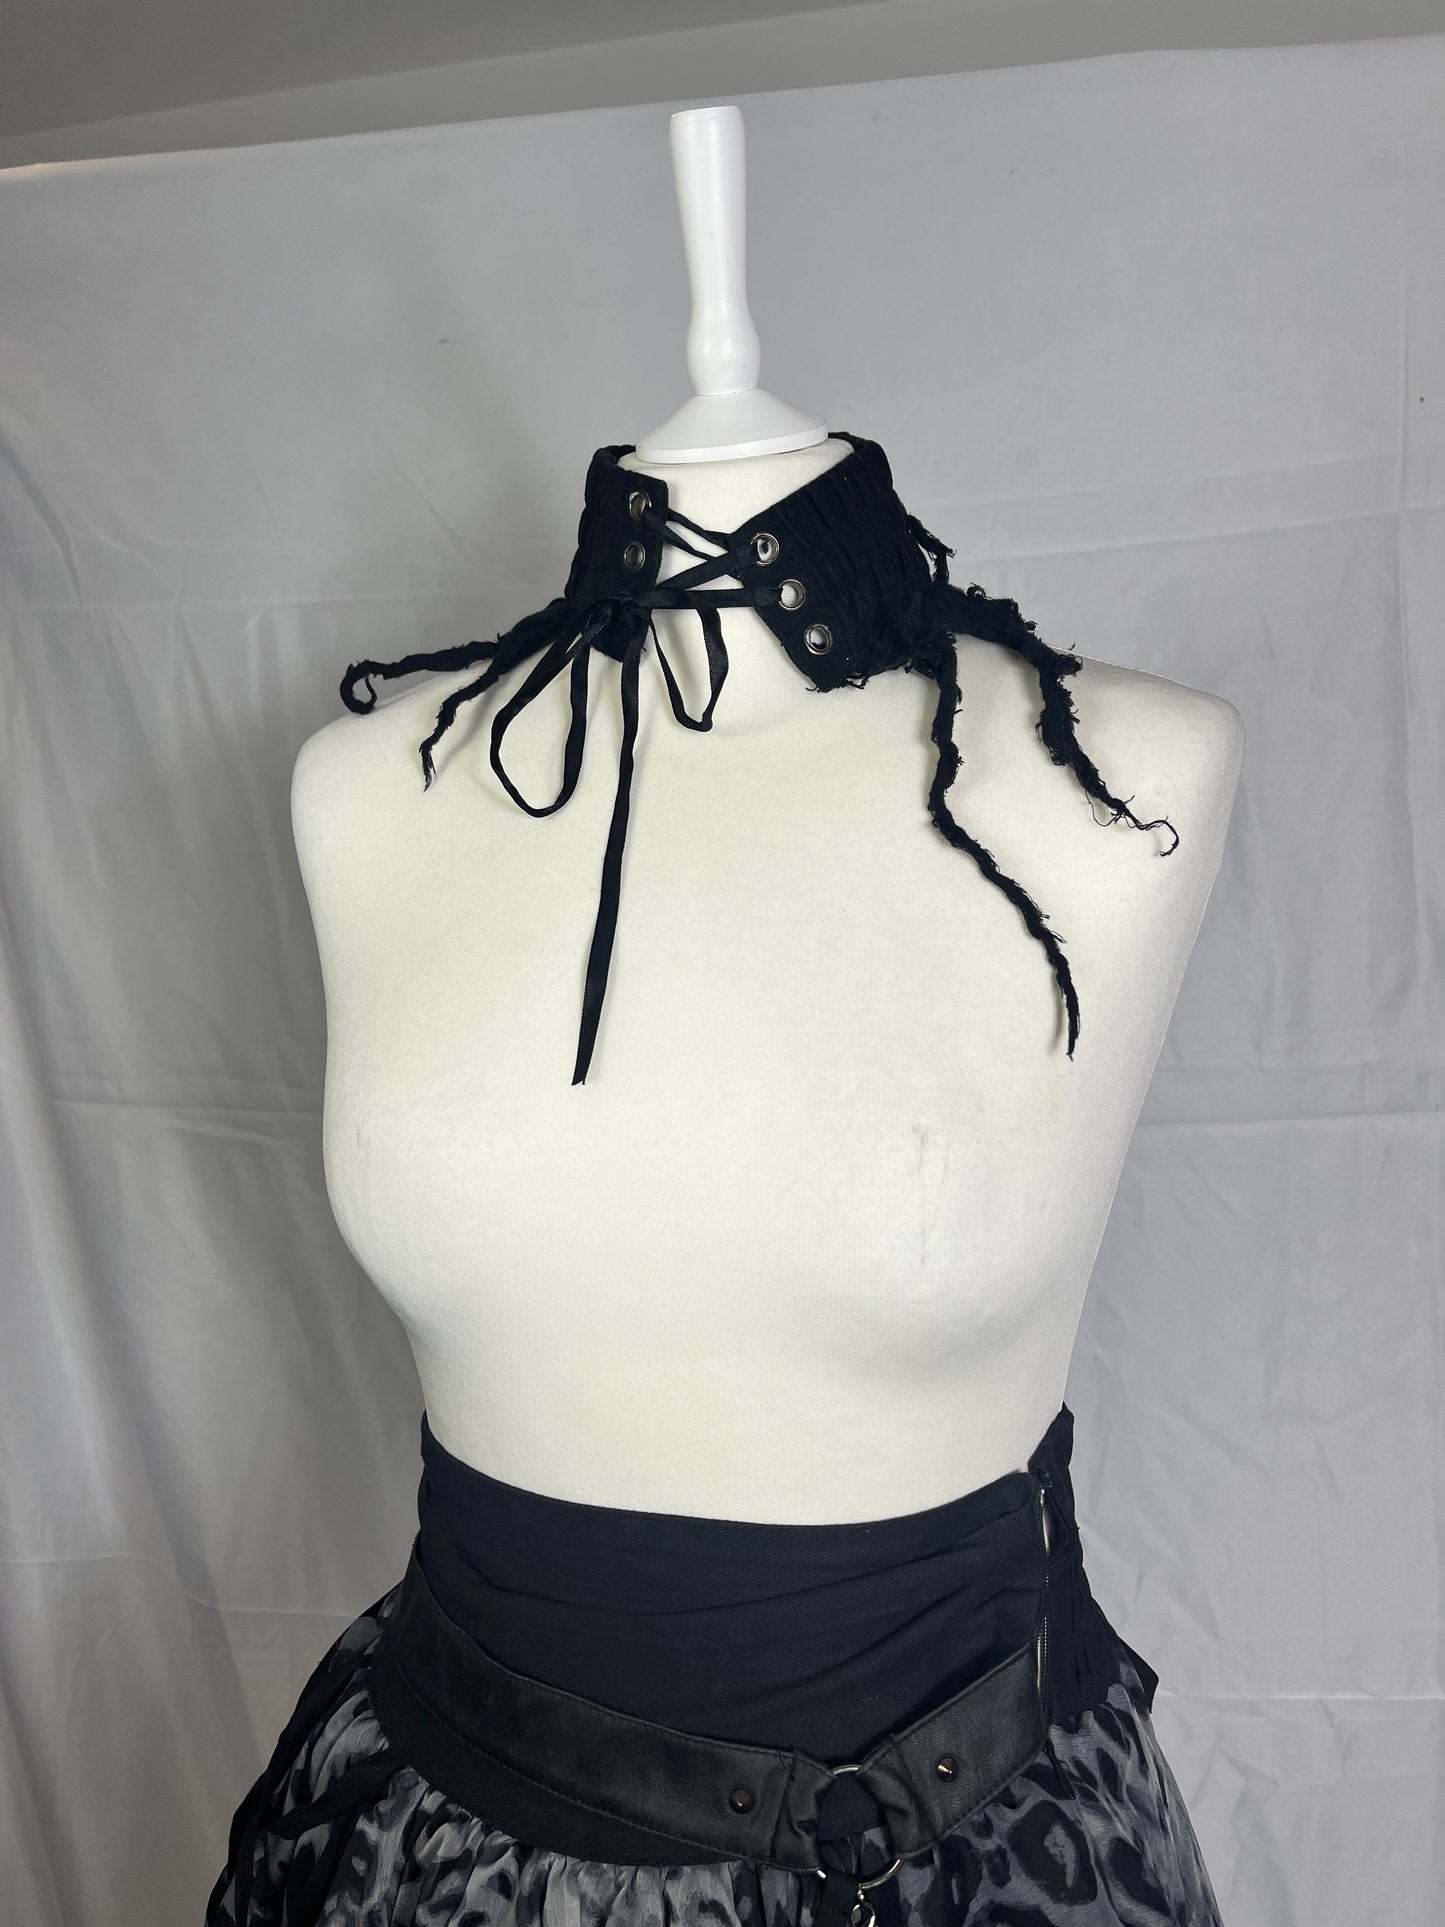 Sexpot Revenge Black Leopard Print Multi Layers Skirt with Legcuffs